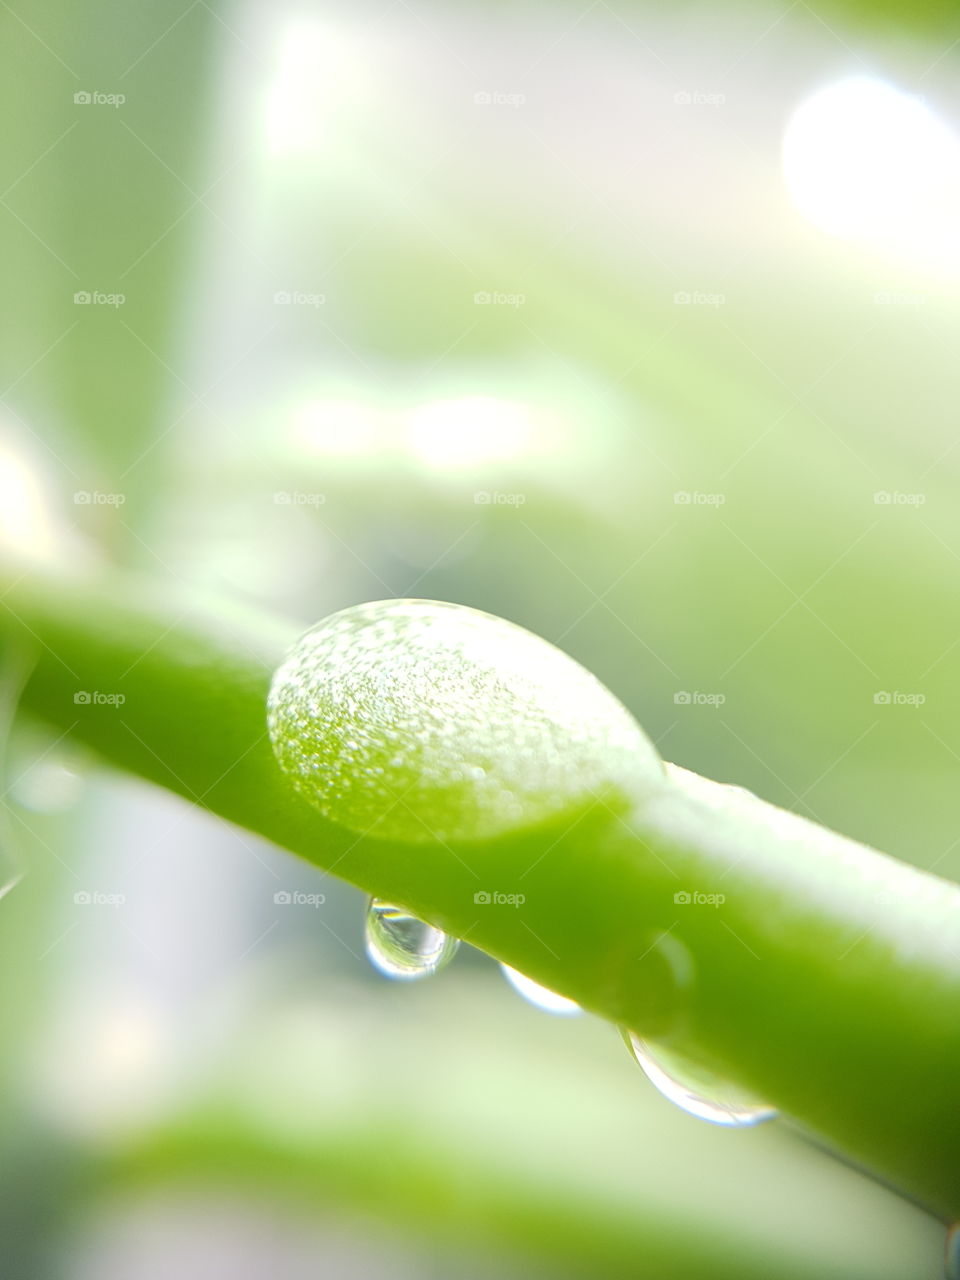 Macro water drop particles  
xerophyte plant